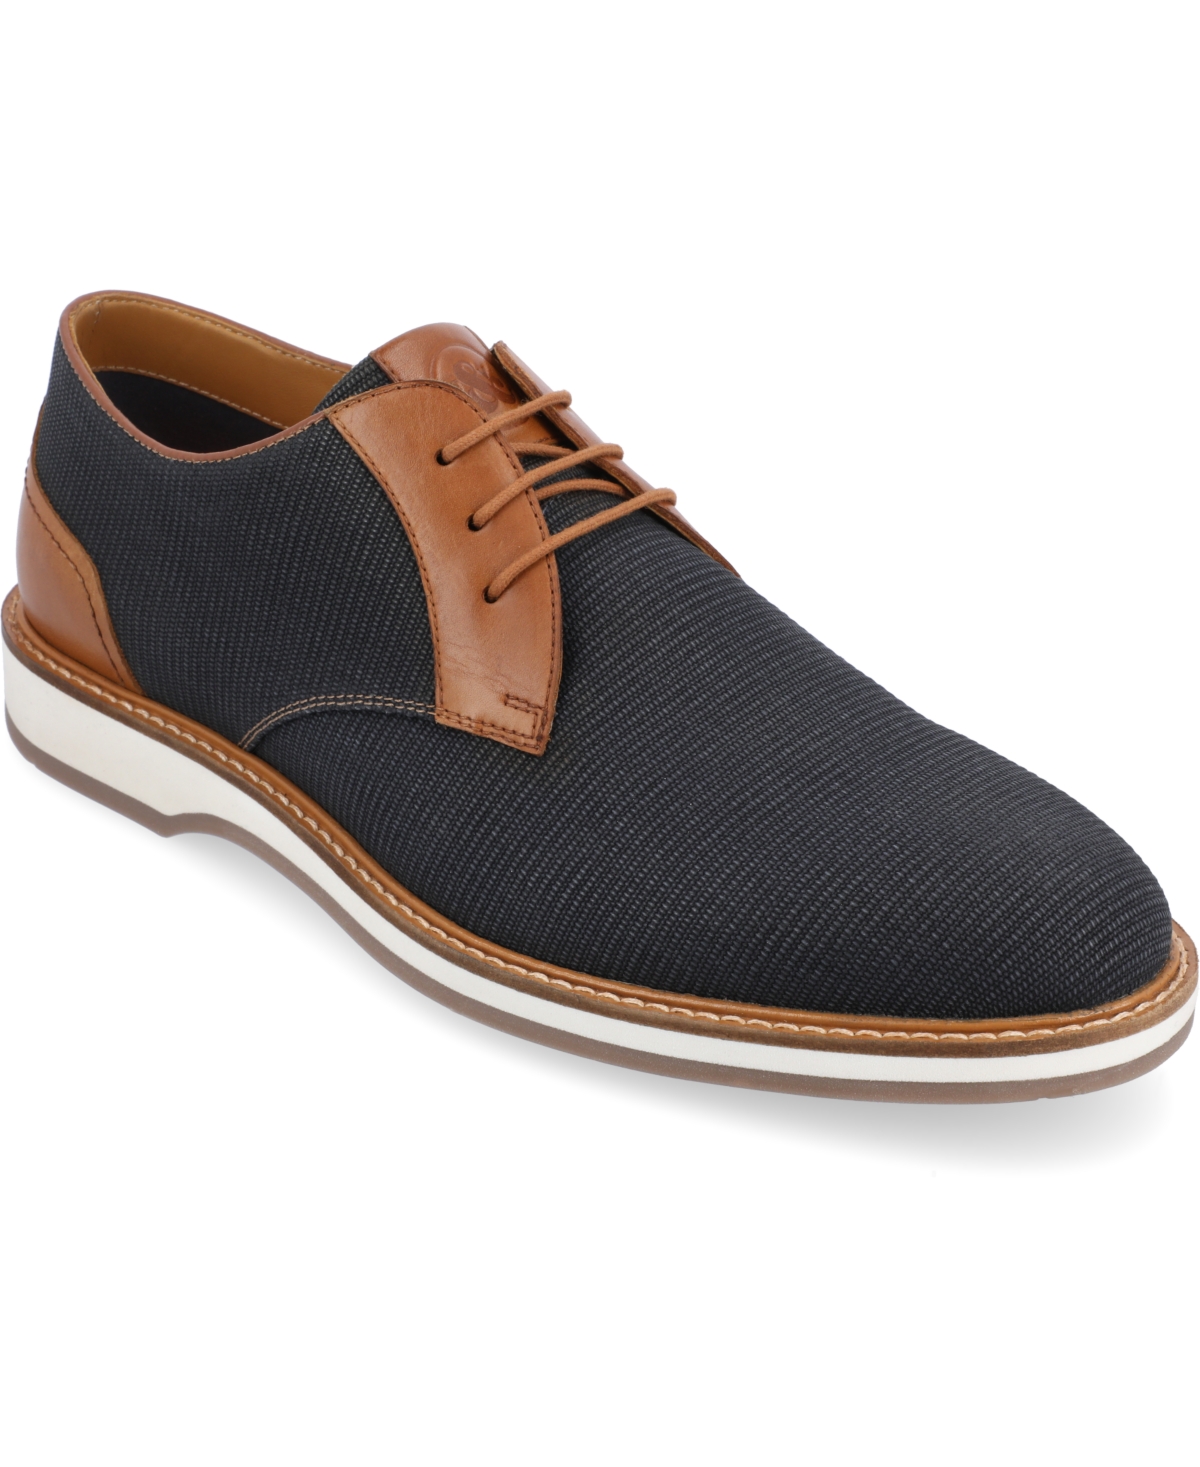 Men's Taggert Plain Toe Derby Casual Shoes - Navy